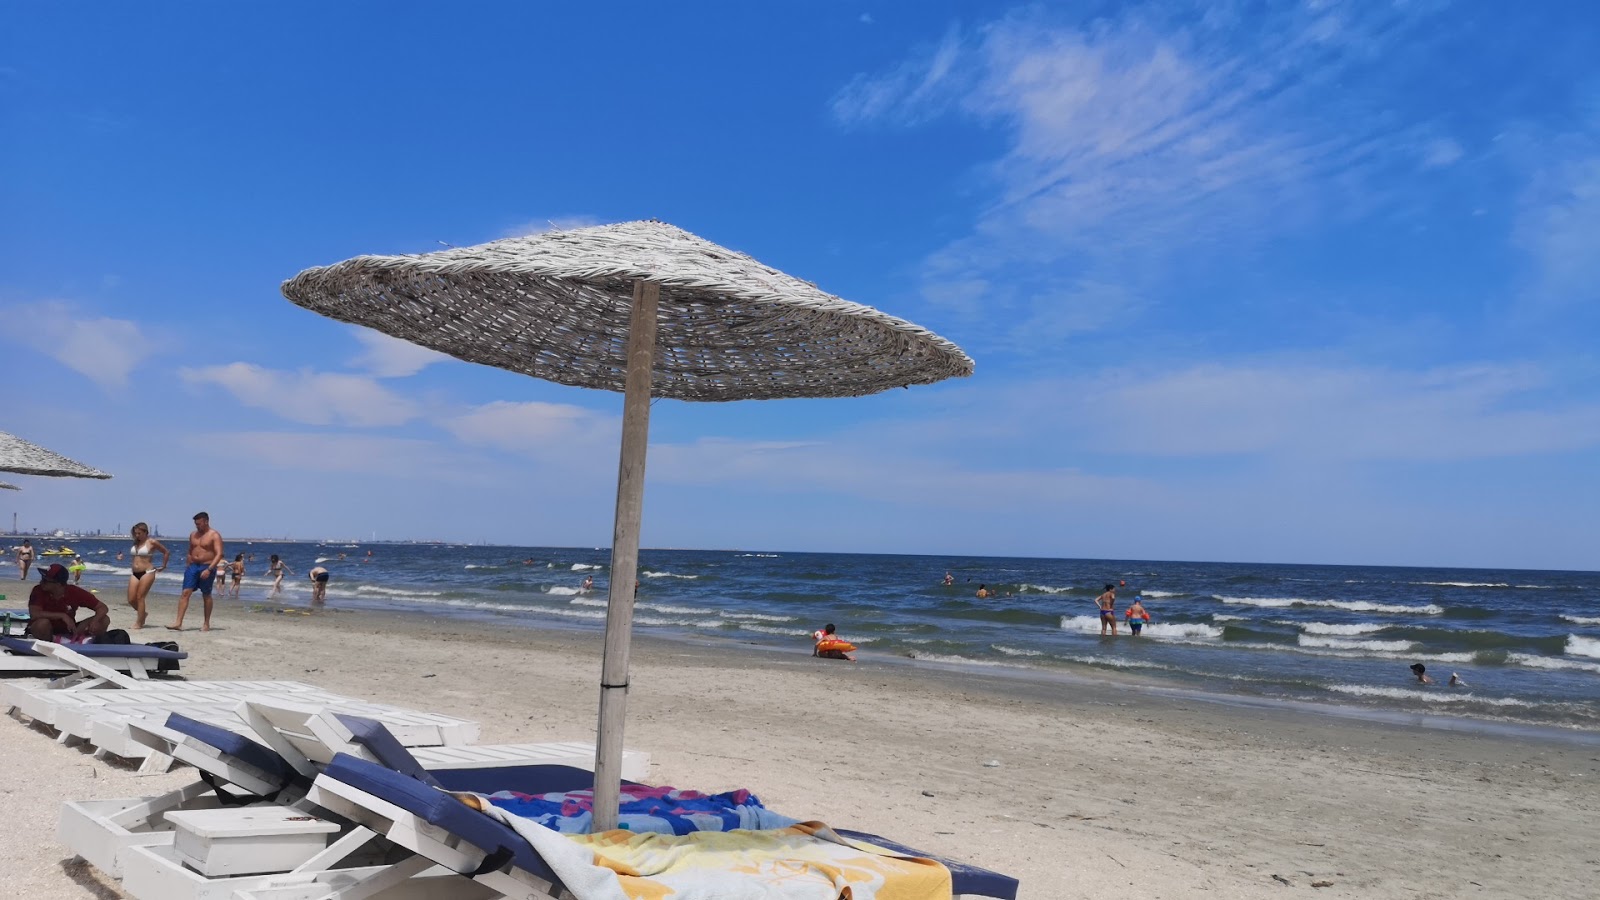 Foto de Praia Kudos - lugar popular entre os apreciadores de relaxamento